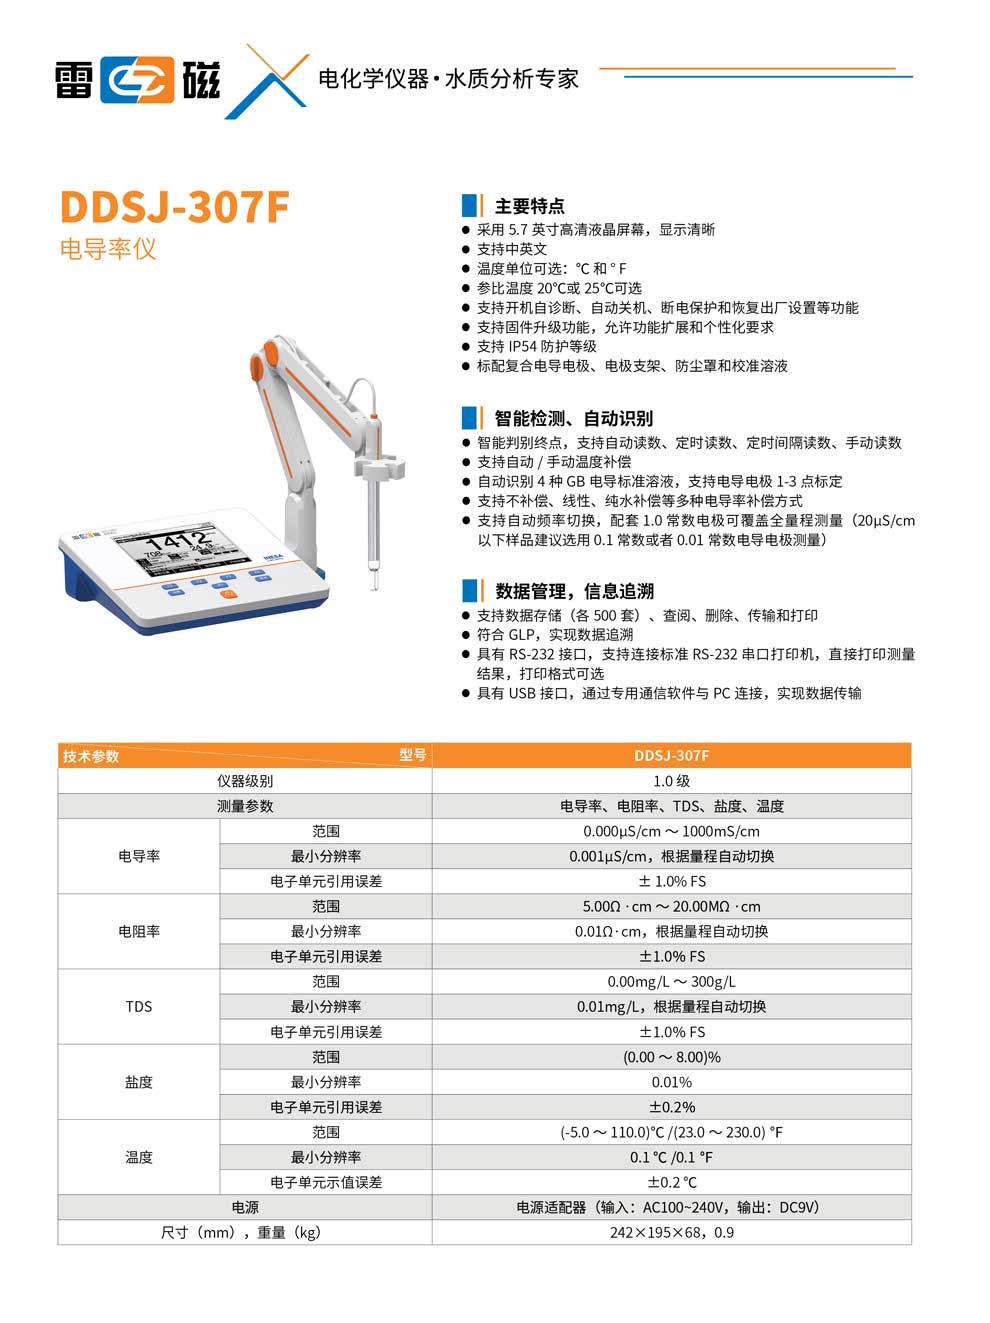 DDSJ-307F-彩页.jpg